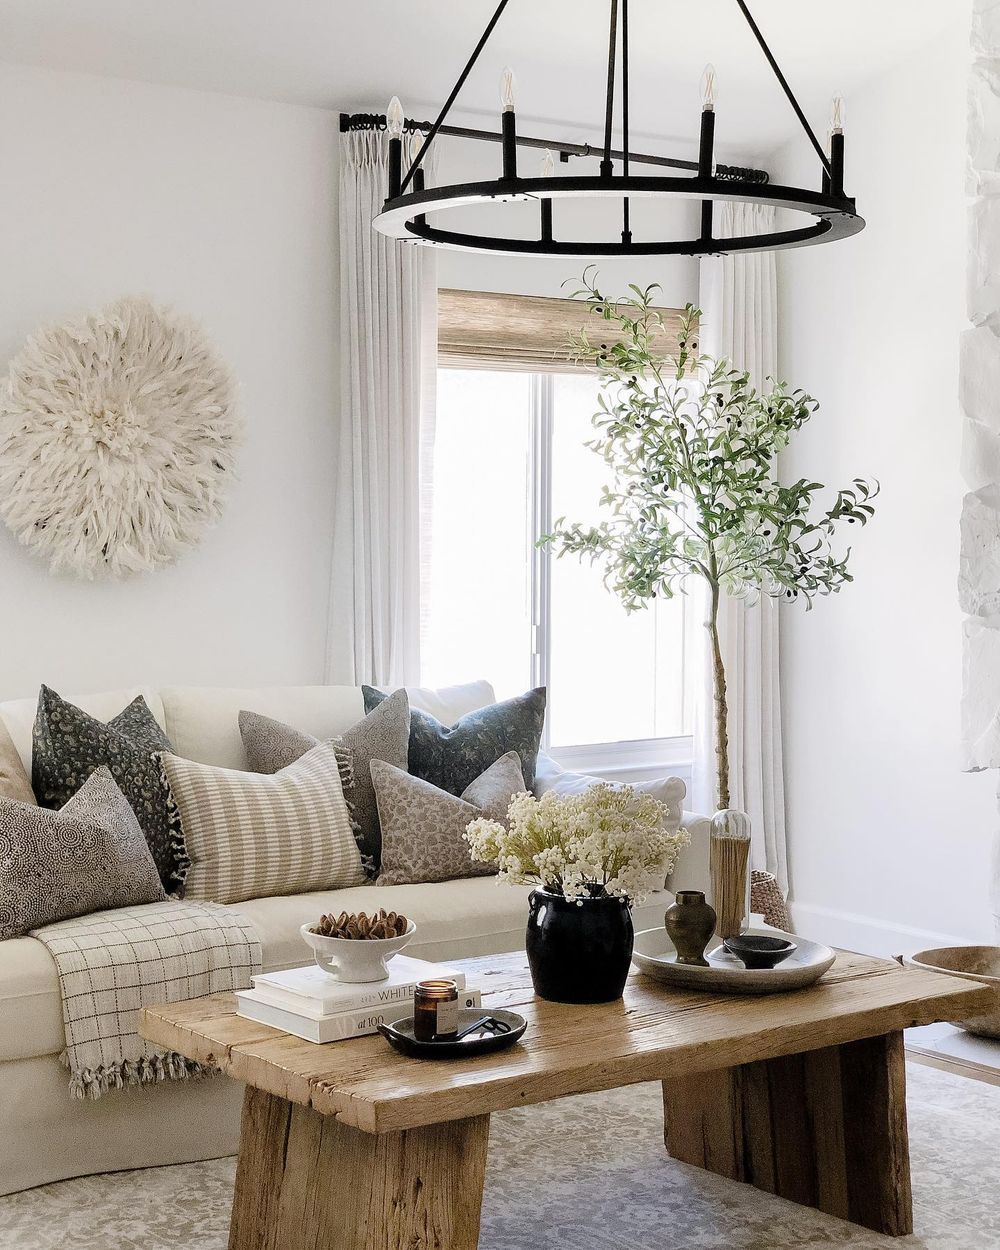 California Casual sofas living room decor via @beauxarts107